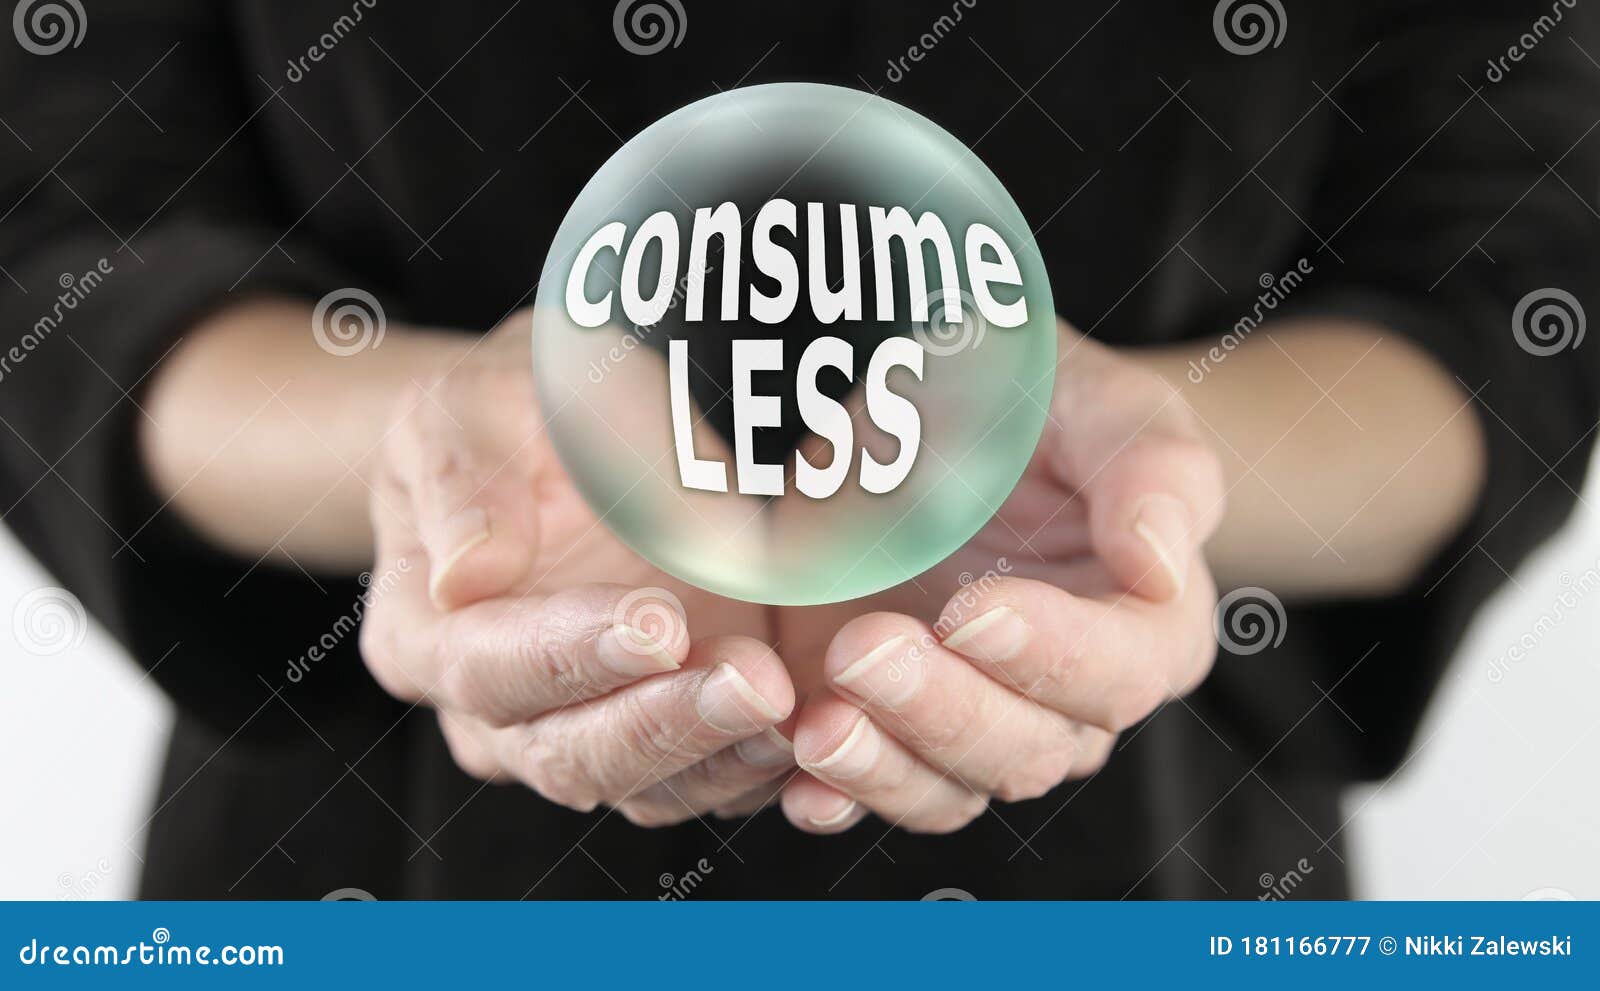 consume less campaign bubble concept